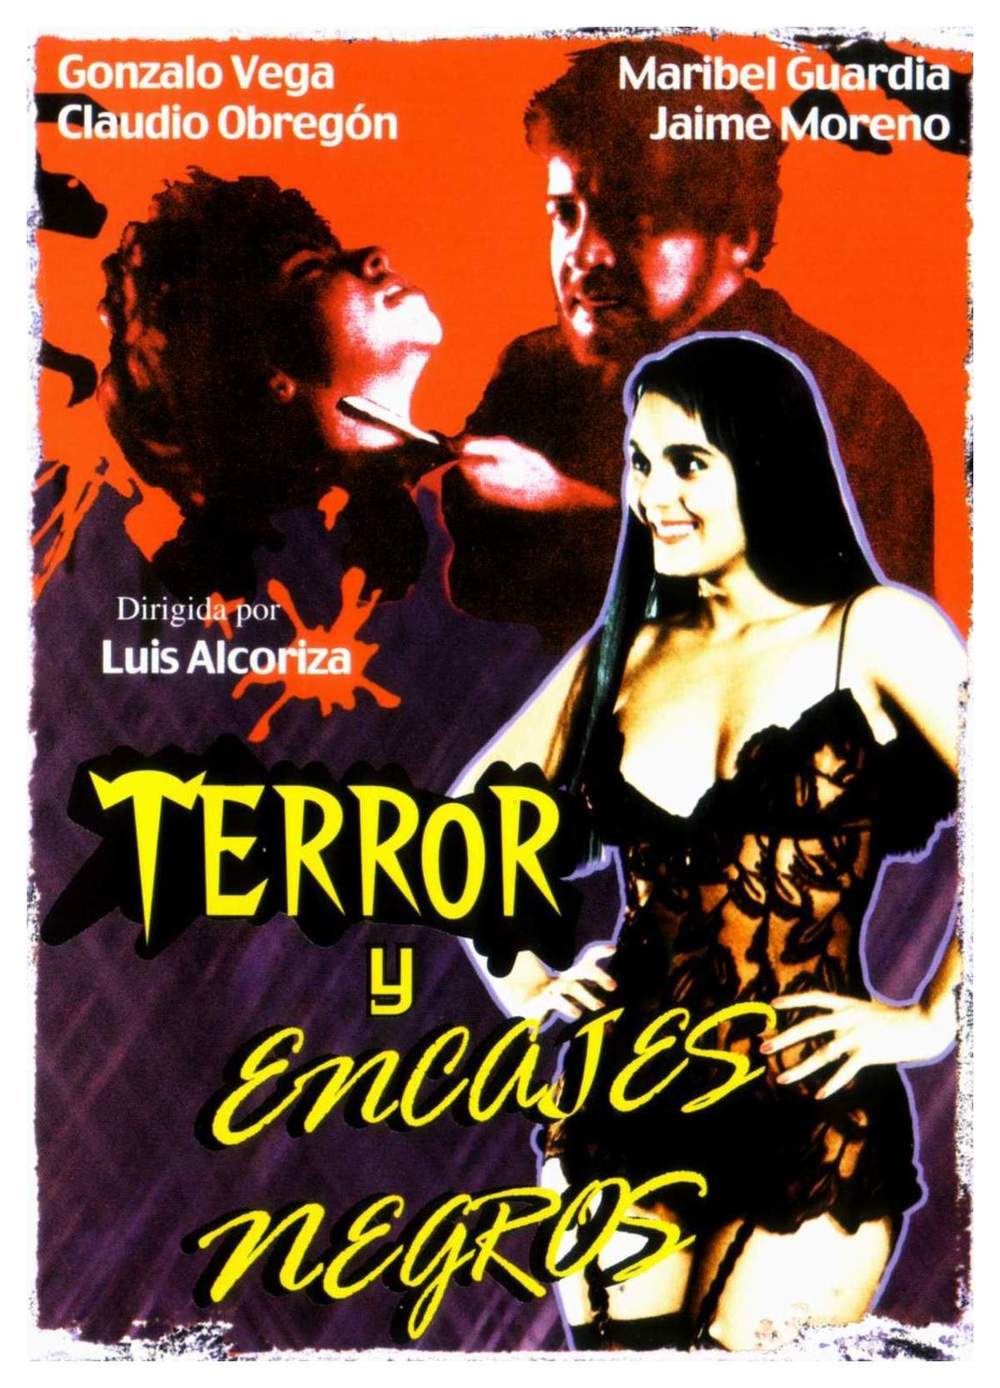 Terror and Black Lace (1986) Screenshot 3 